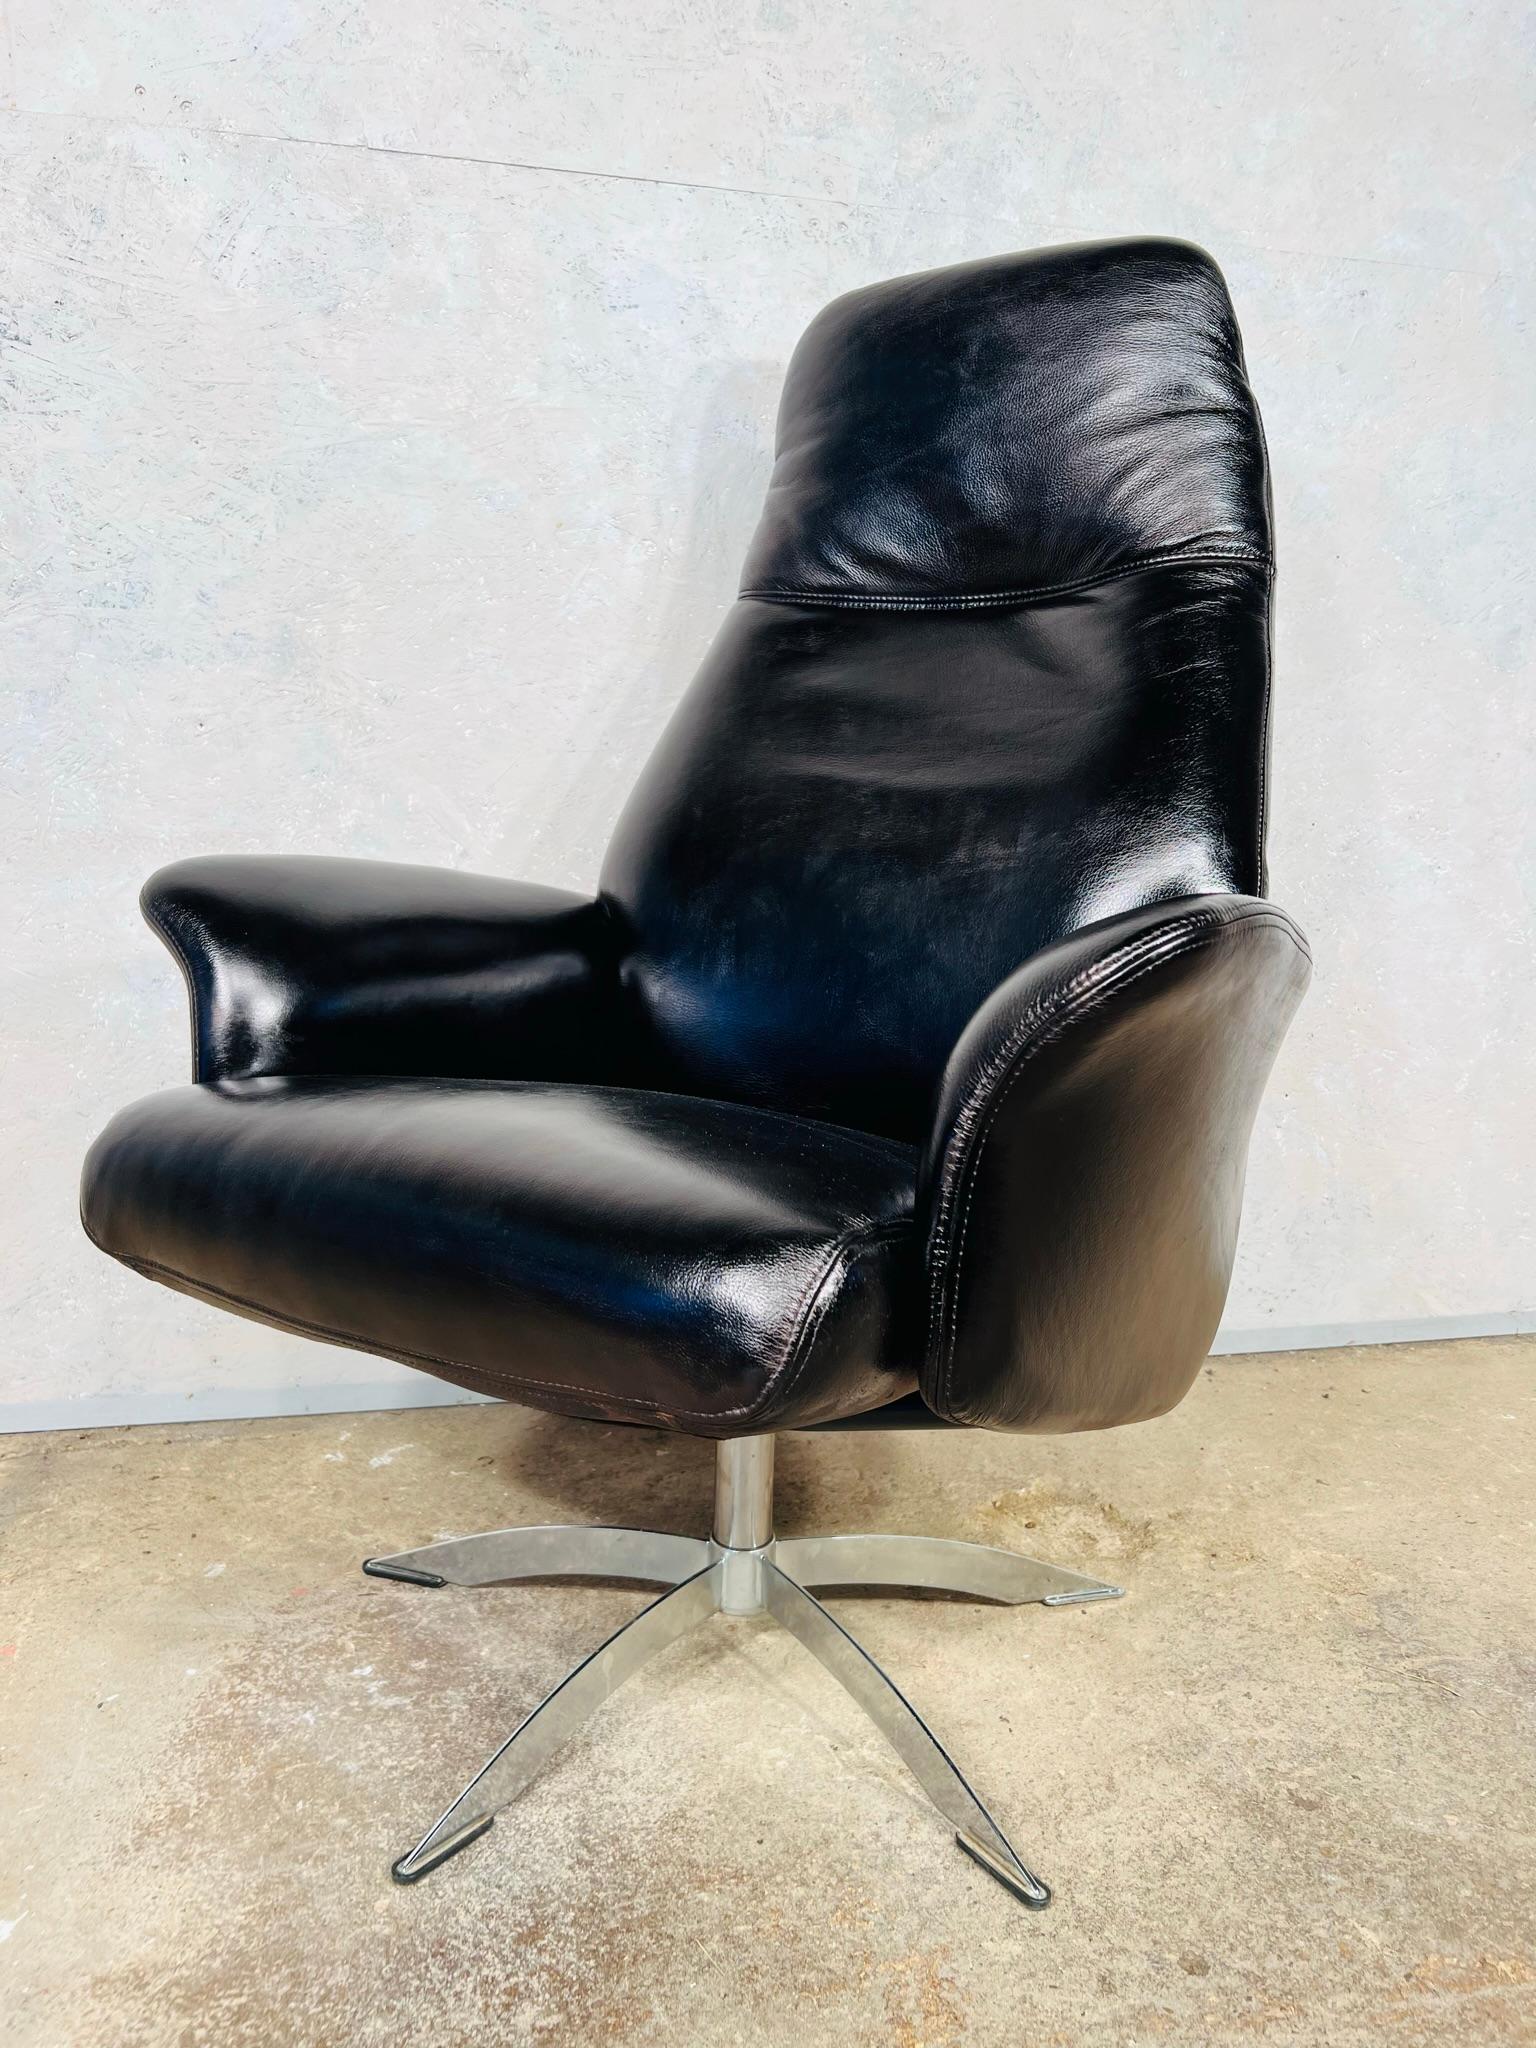 Vintage Danish Swivel Black Leather Desk Chair By Hjort Knudsen #589 4